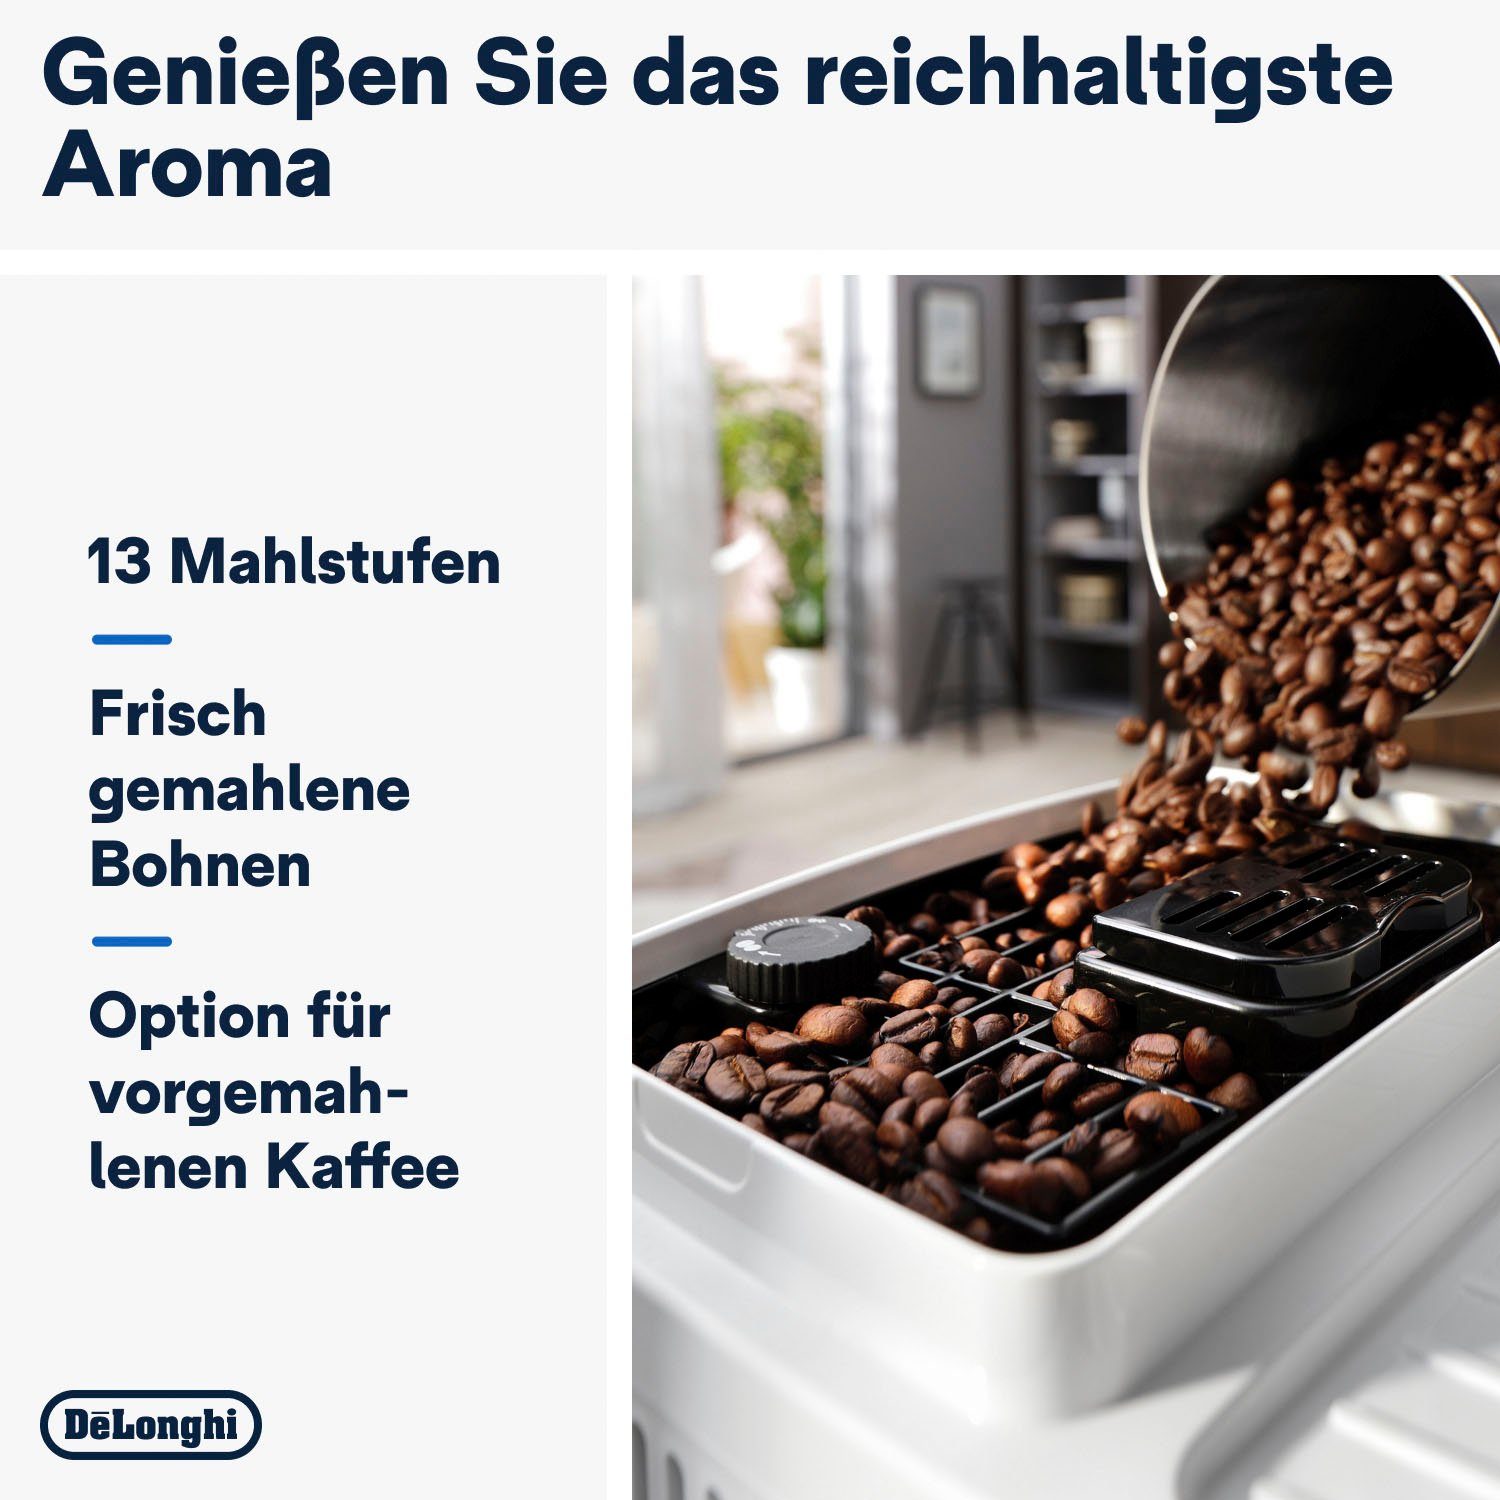 De'Longhi Kaffeevollautomat Magnifica Start ECAM 220.61.W weiß